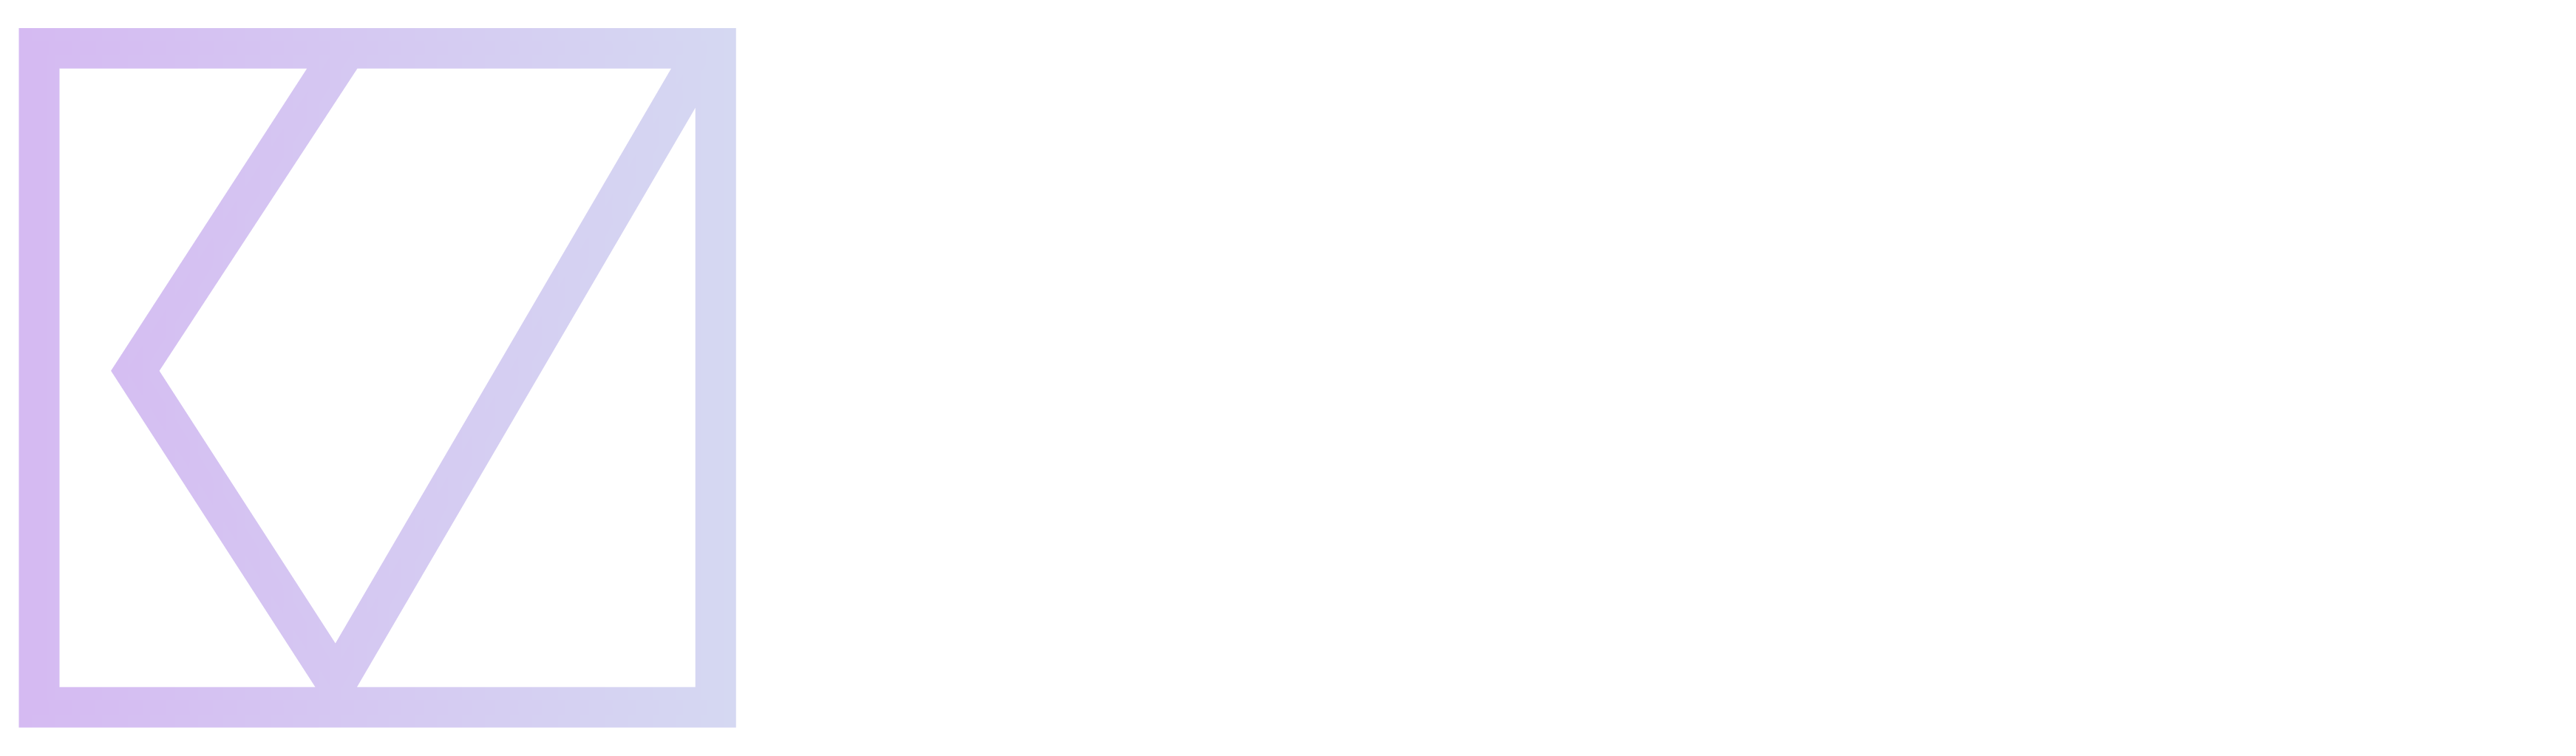 Katrien Vanhonacker